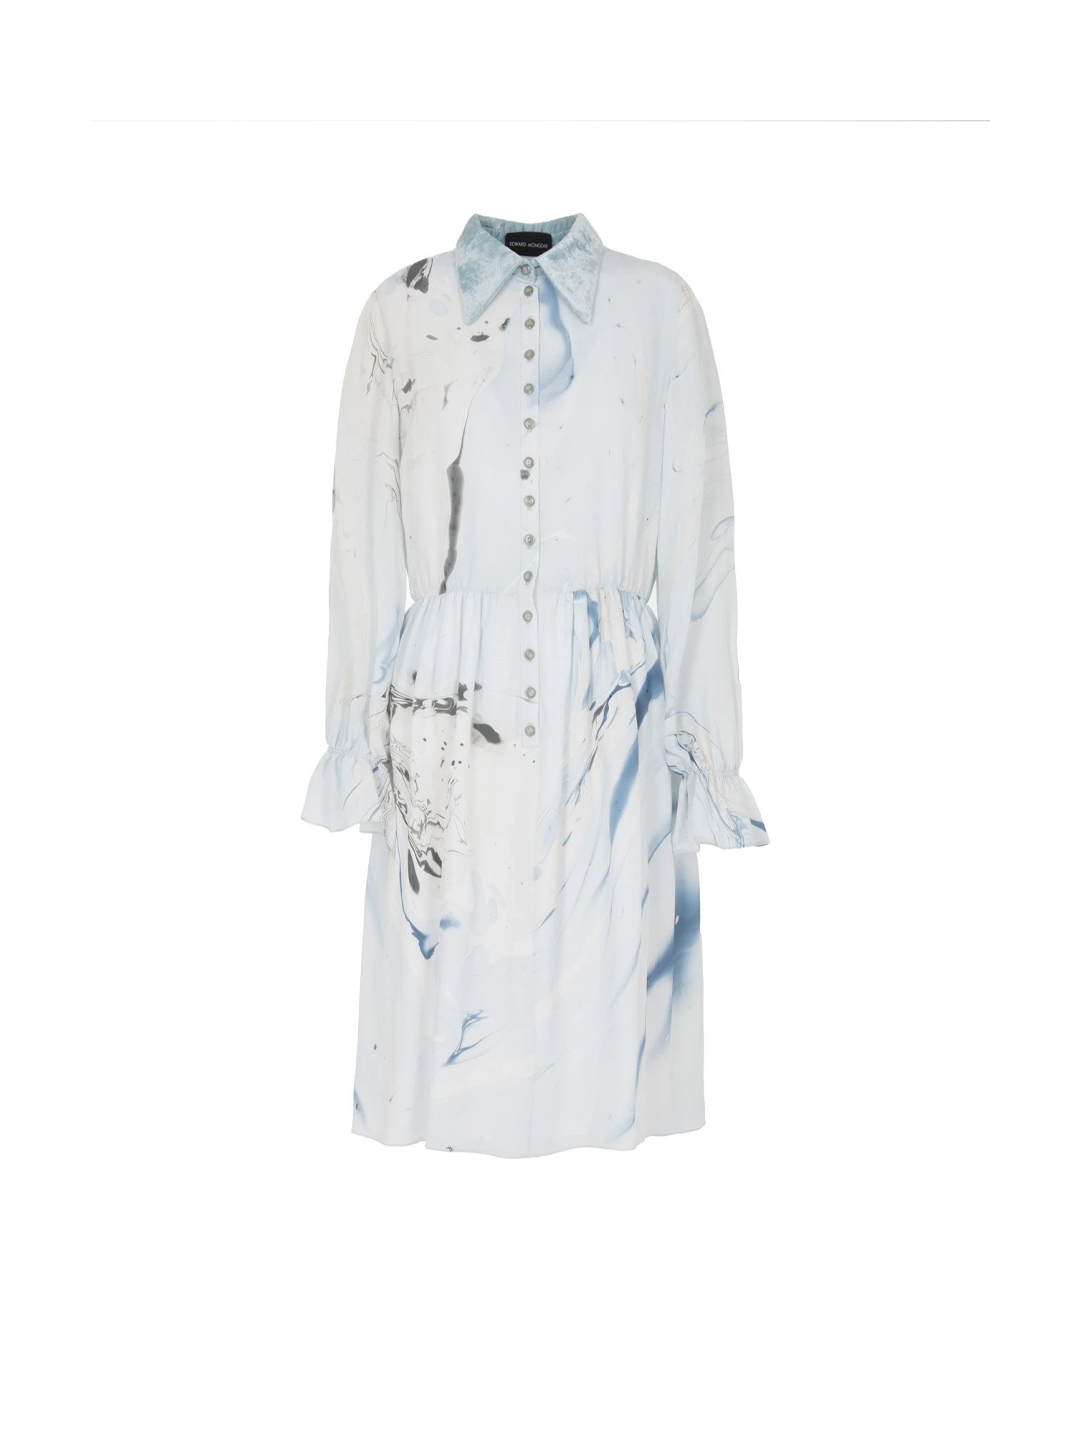 Edward Mongzar Silk & Velvet Hand Marbled Button Up Shirt Dress in White, Blue & Grey